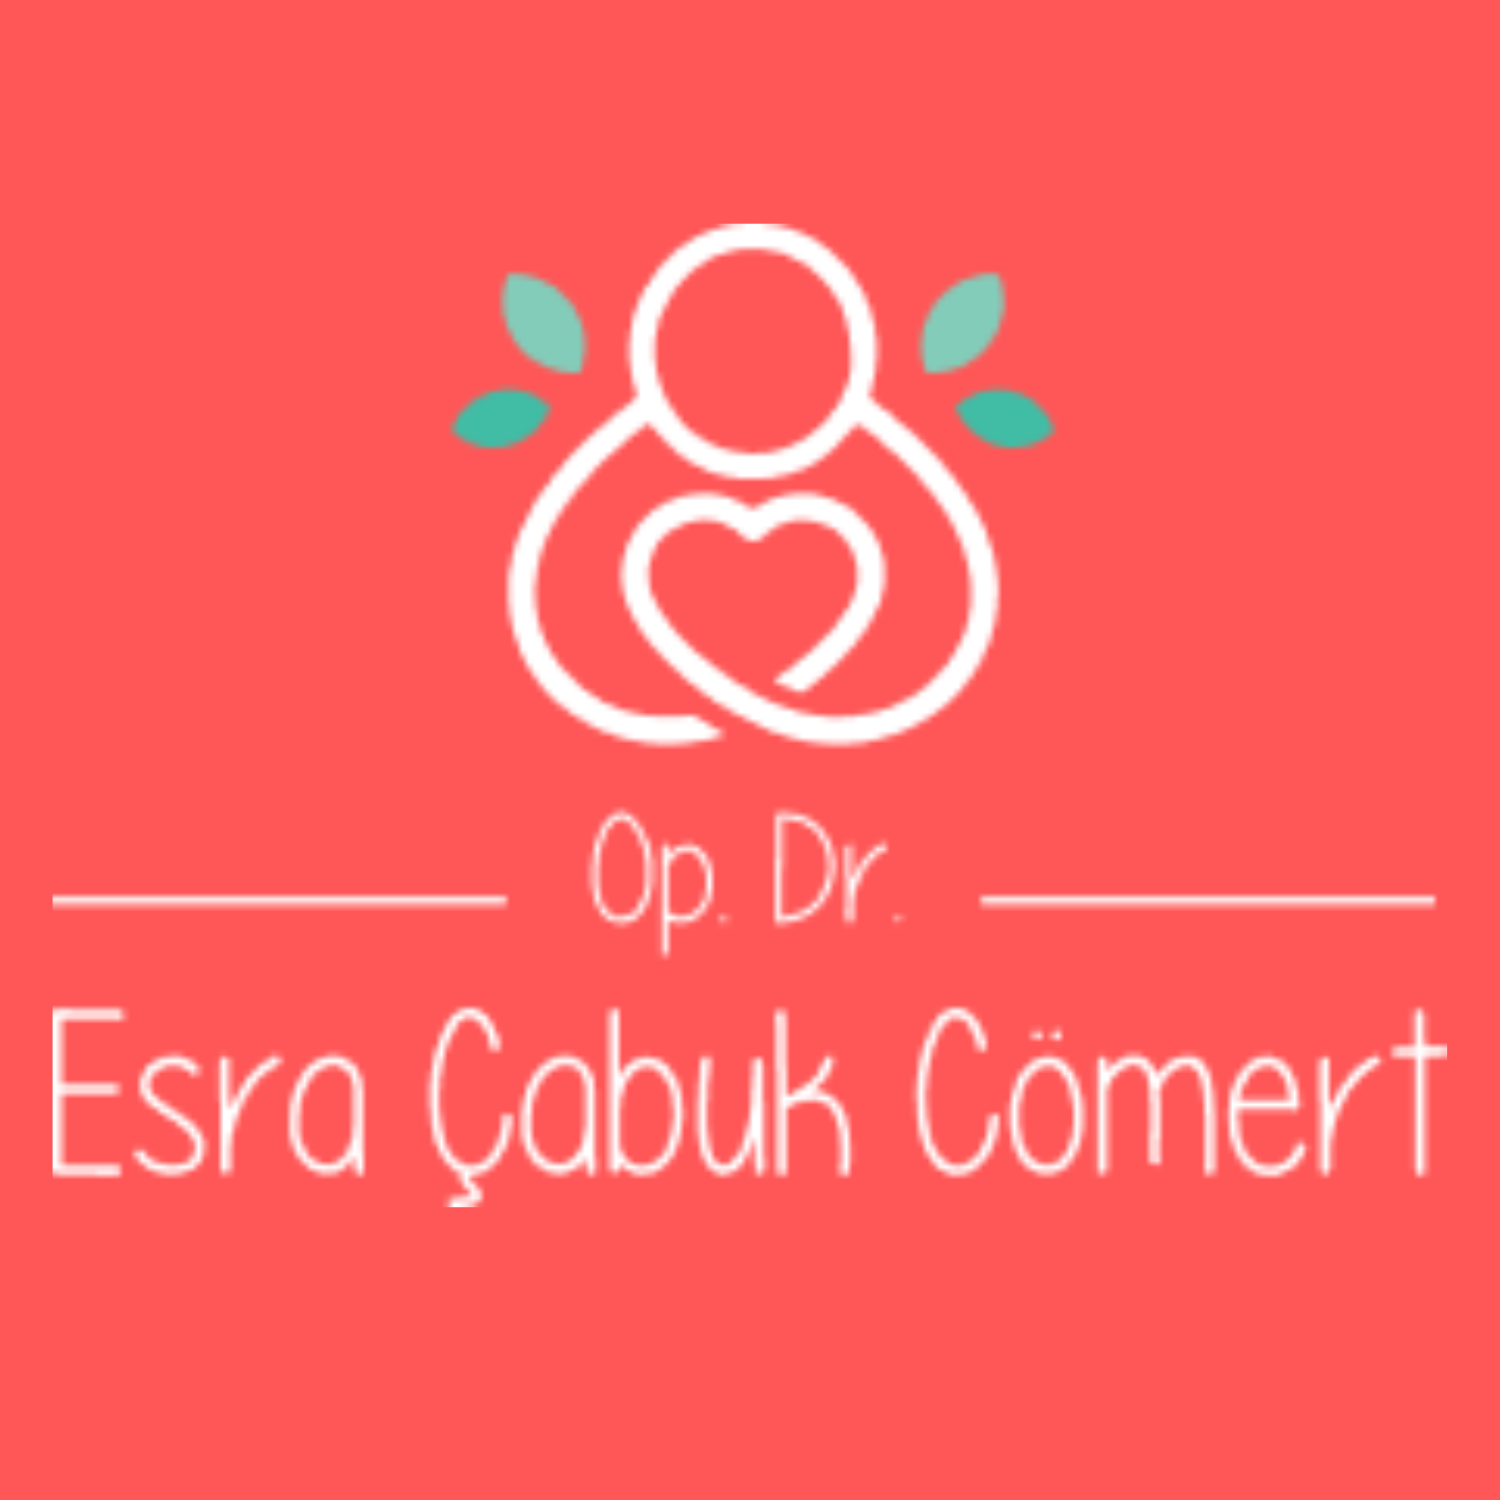 Dr. Esra Cabuk Comert Clinic